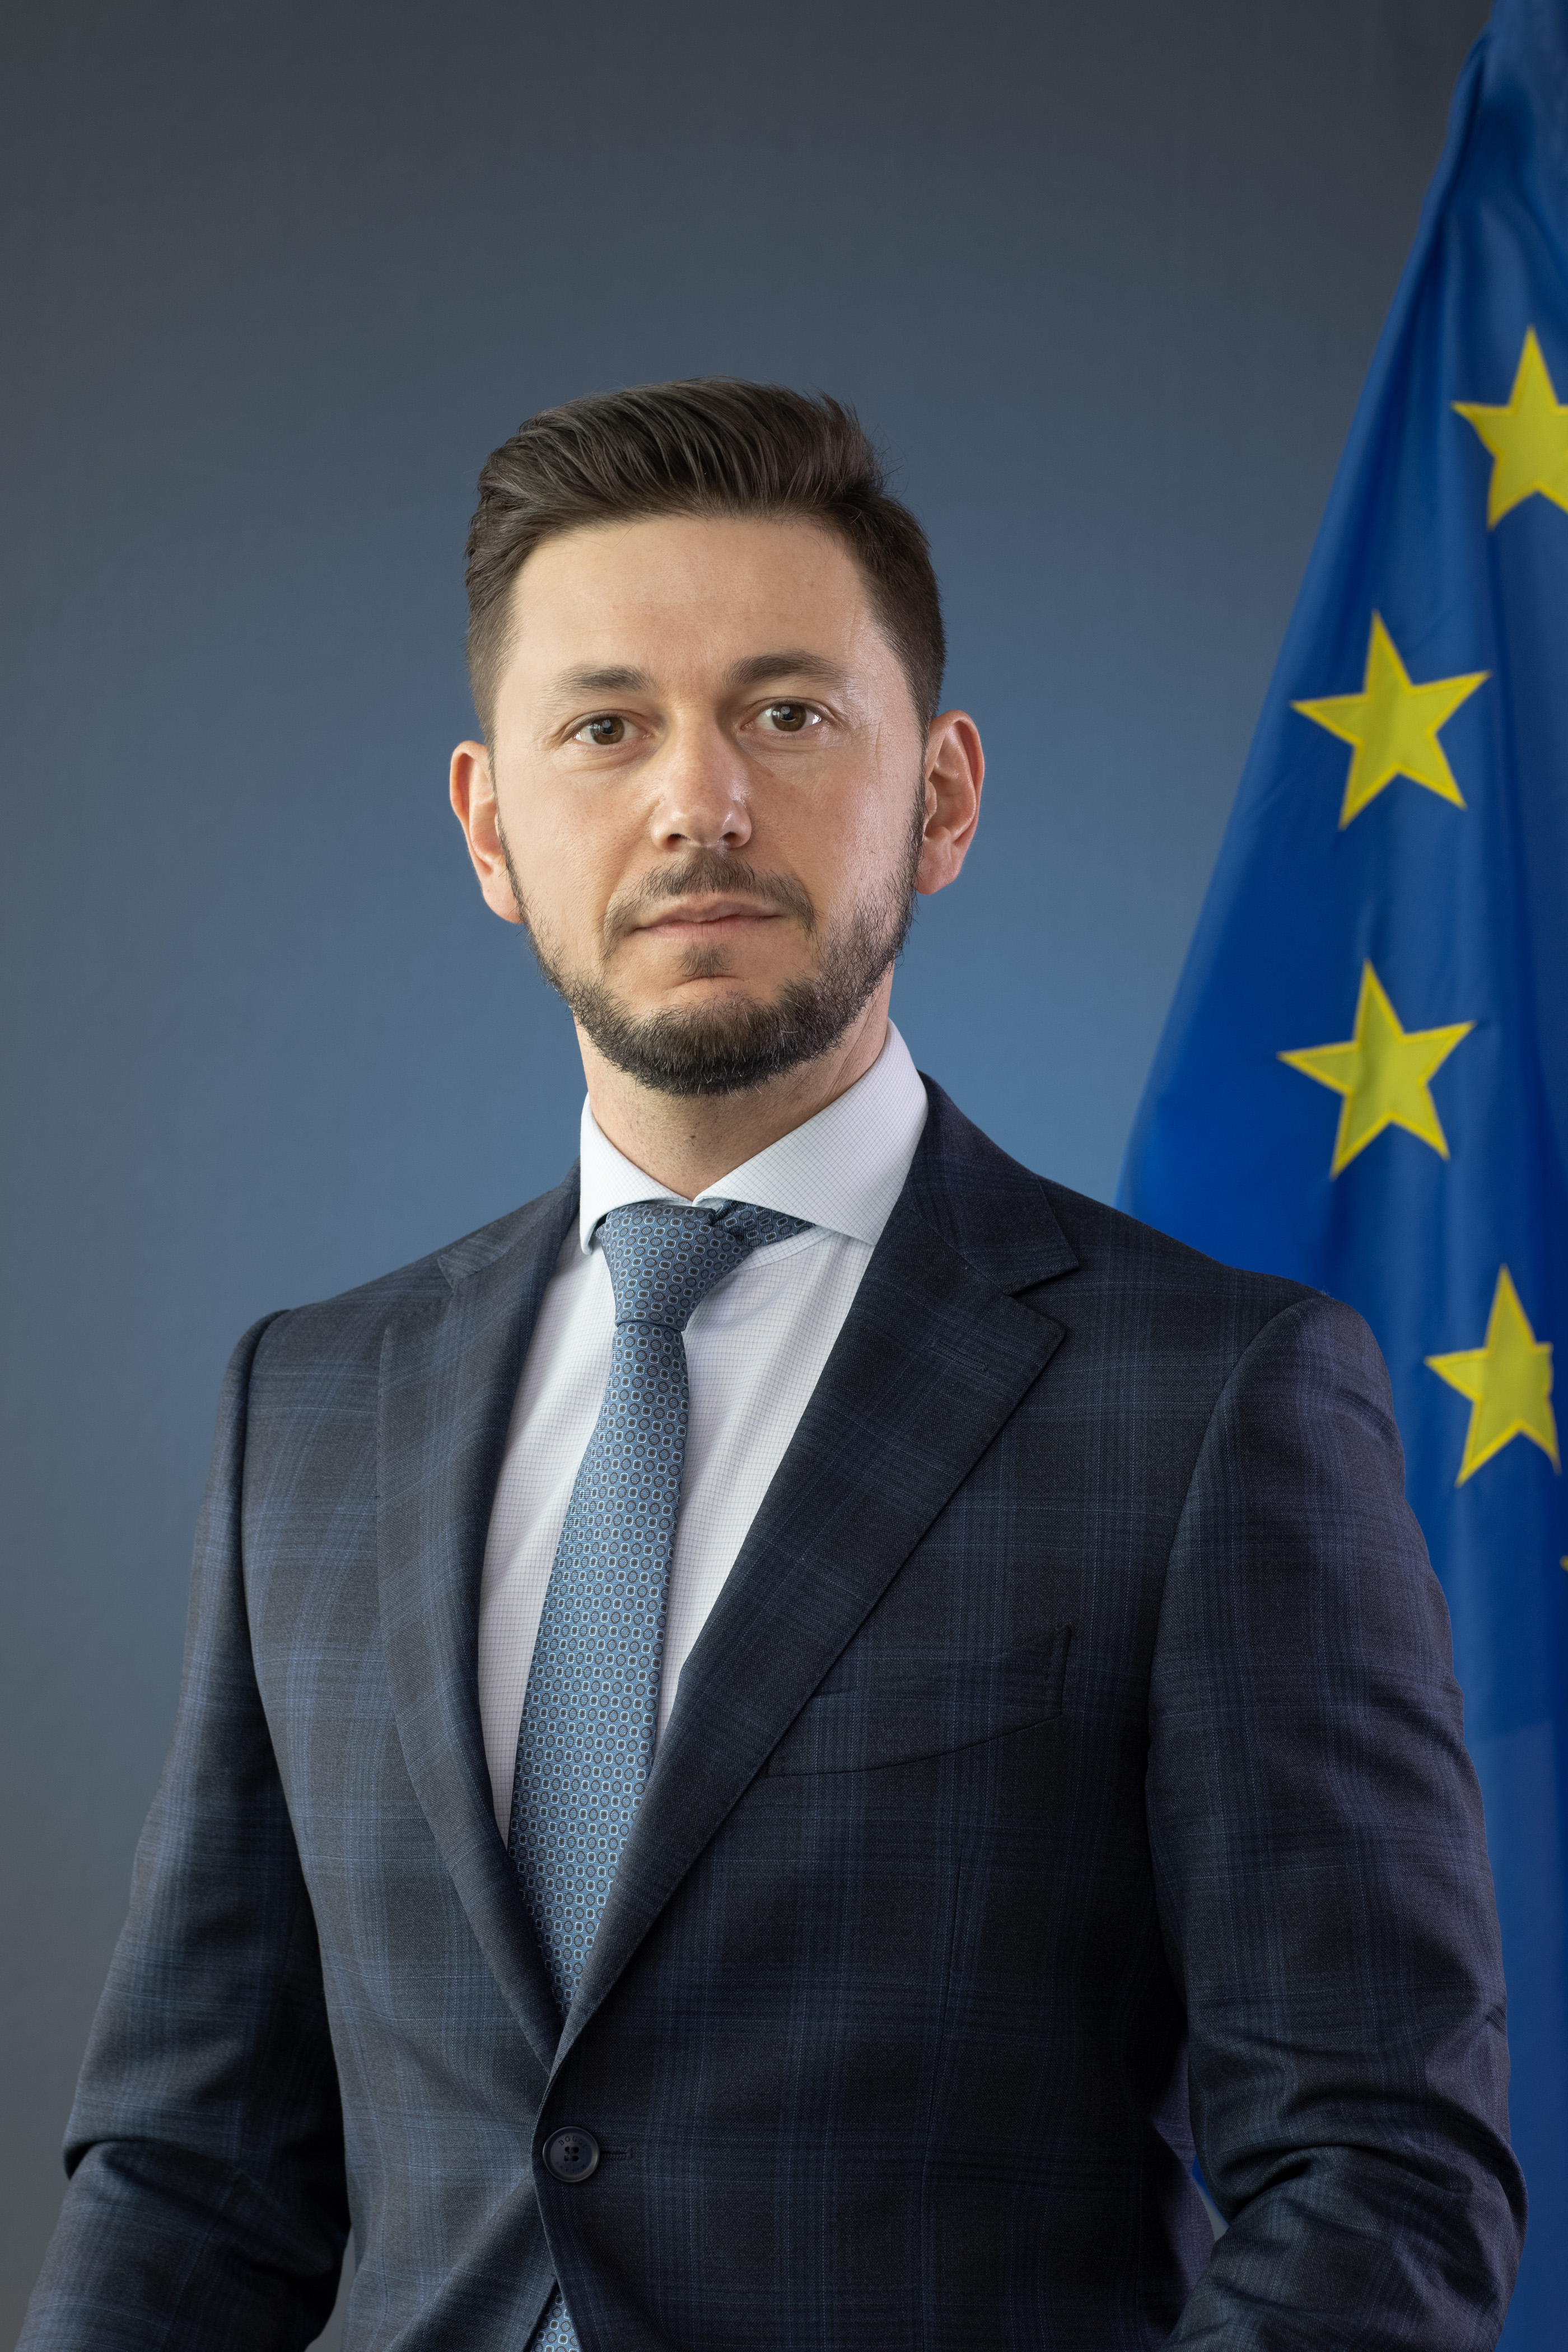 Photograph of European Prosecutor for Luxembourg Gabriel Seixas